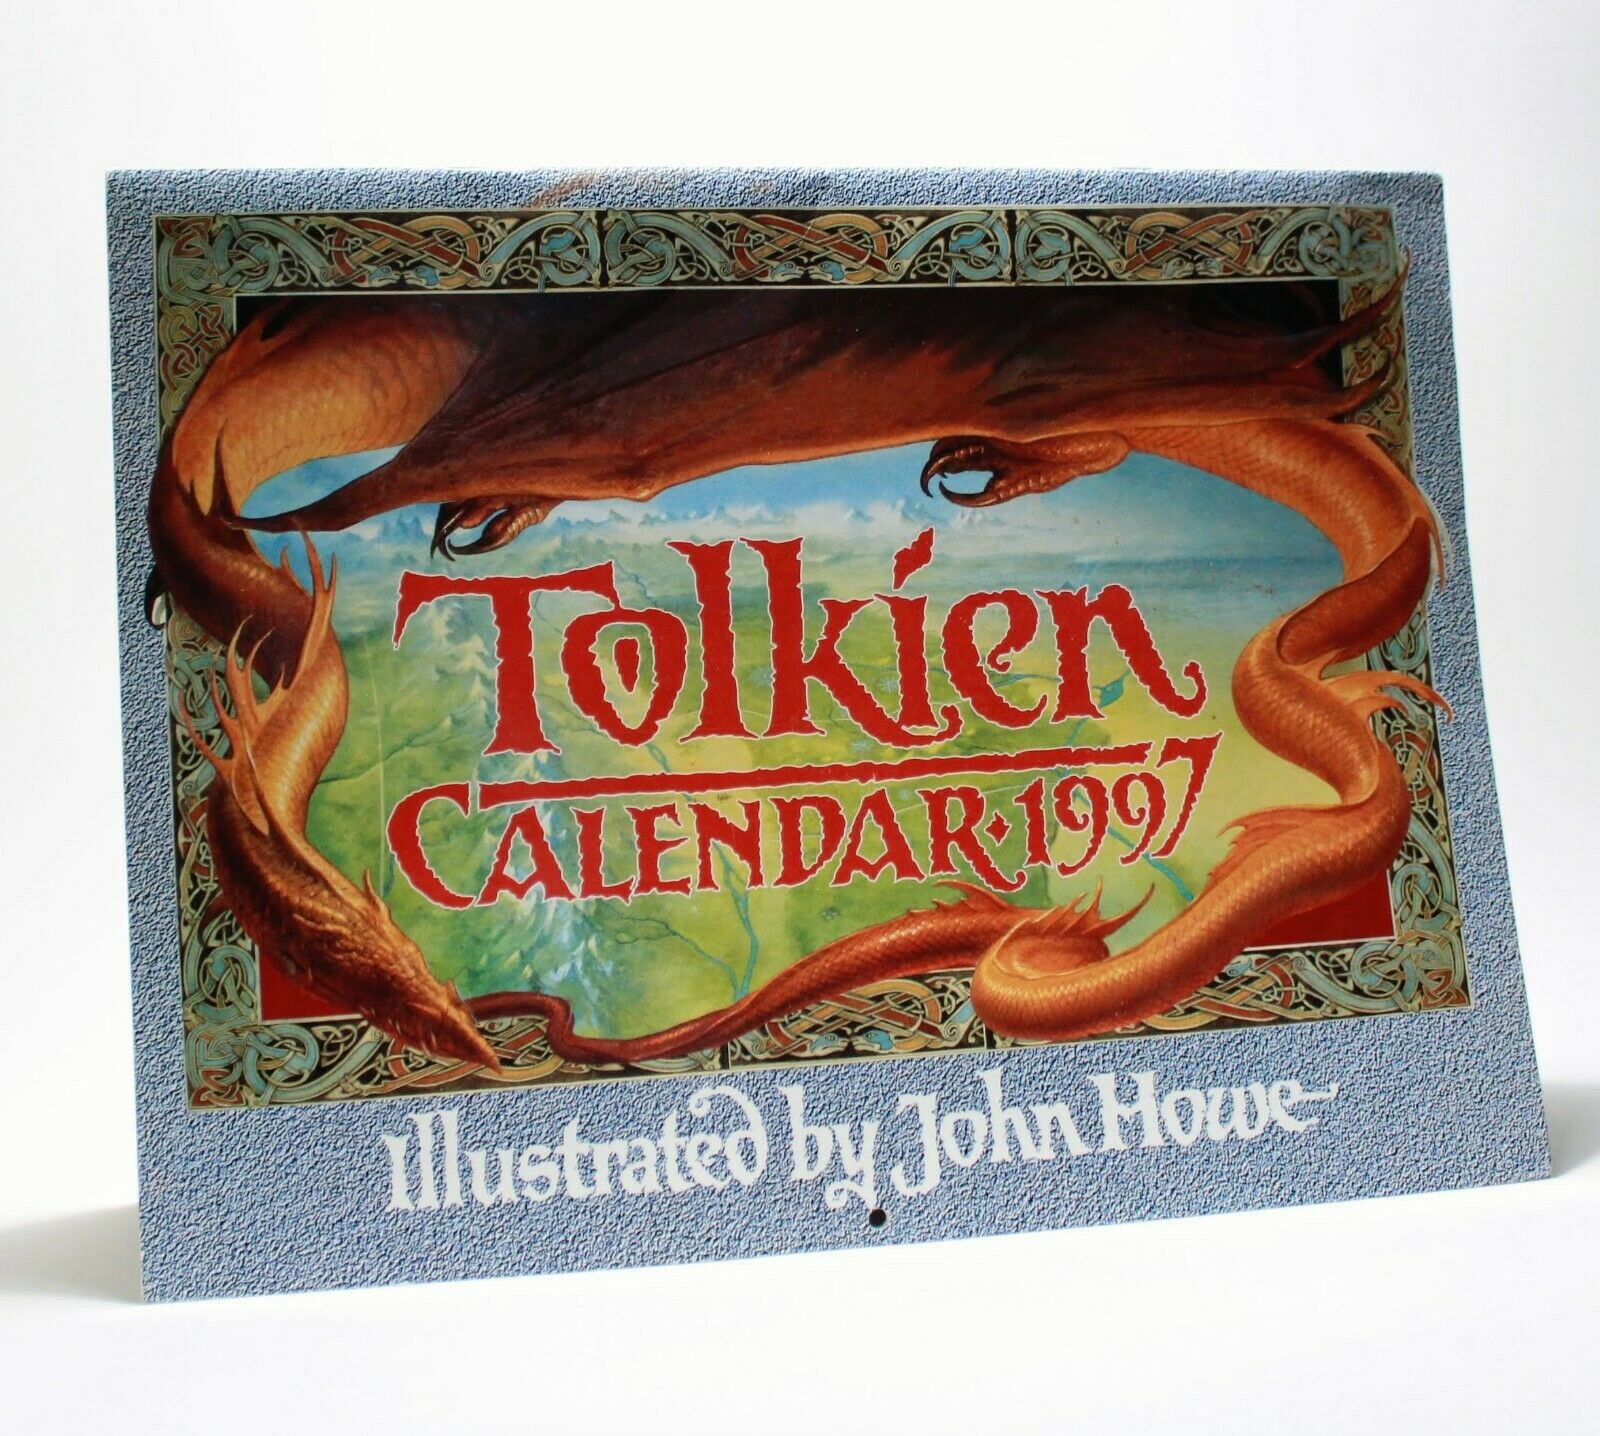 J.R.R. Tolkien Calendar 1997 - Illustrated by John Howe